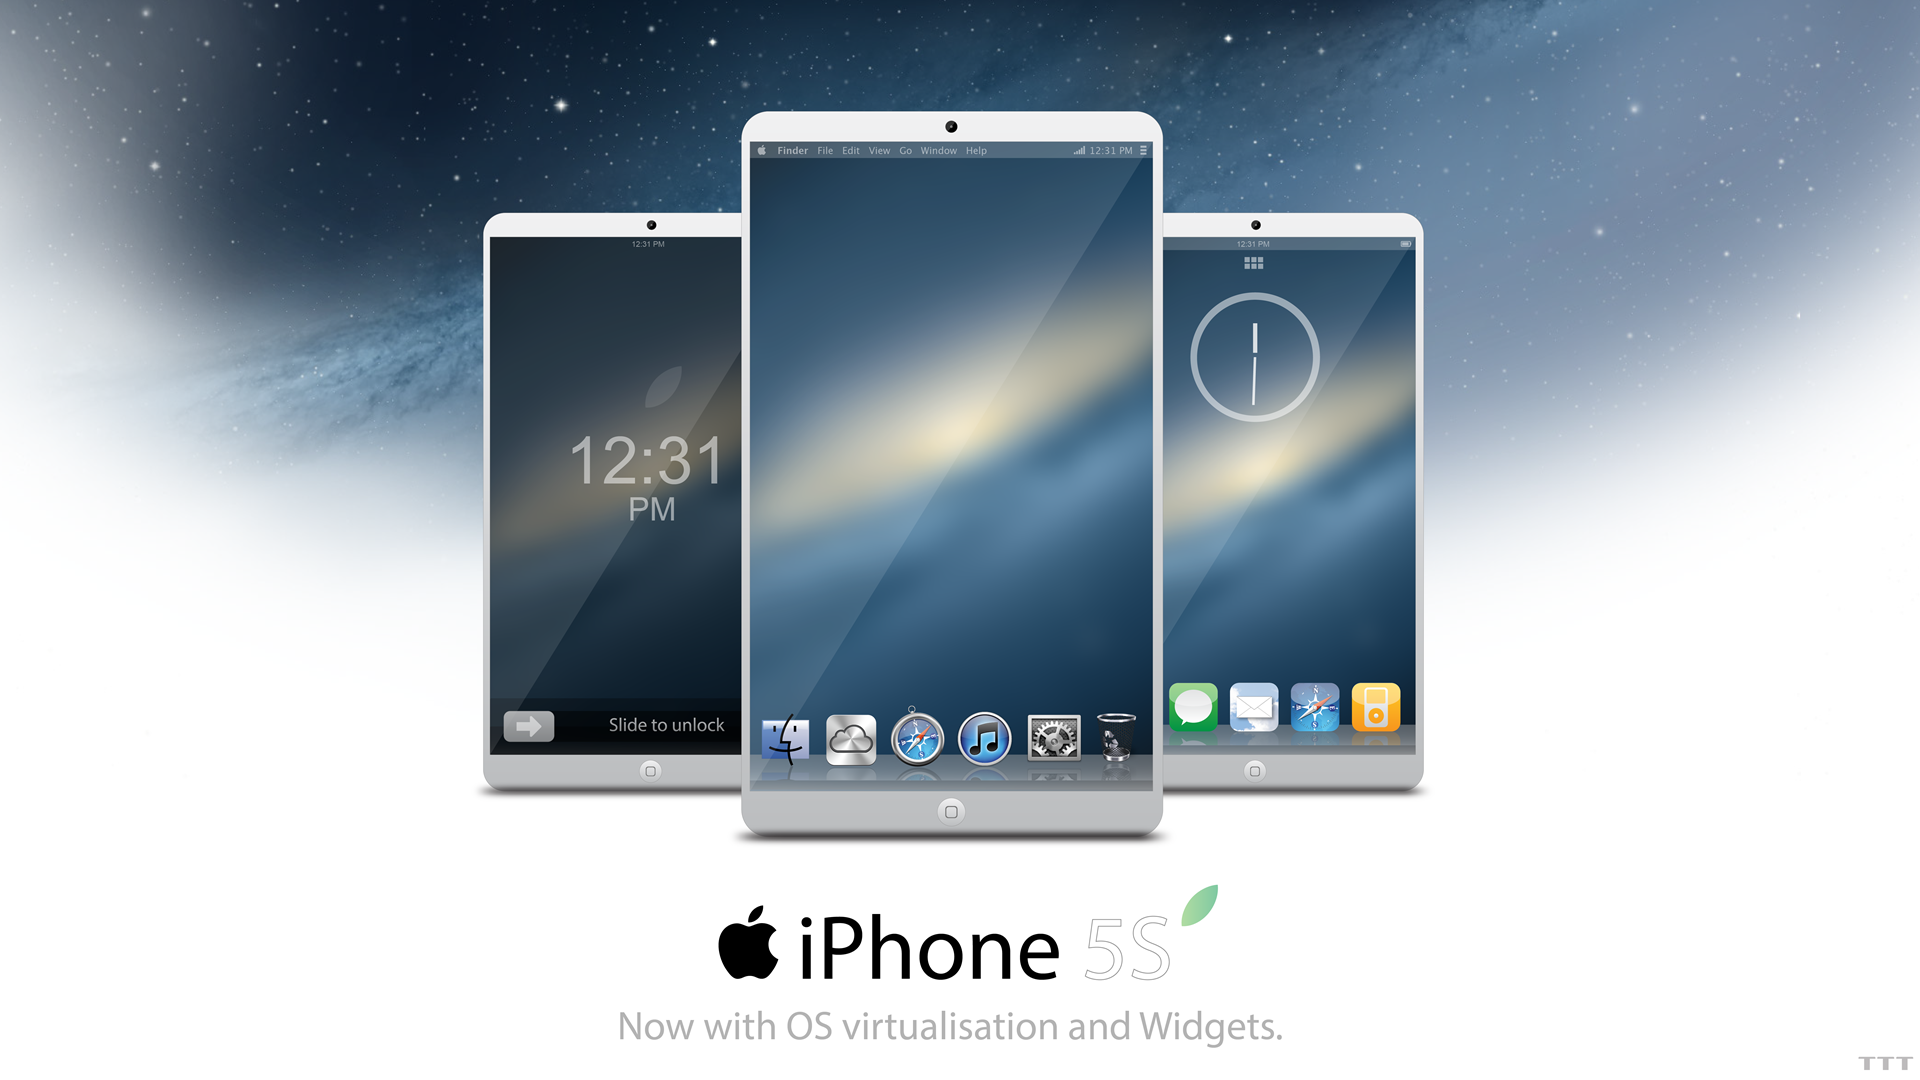 Apple iPhone 5S Concept